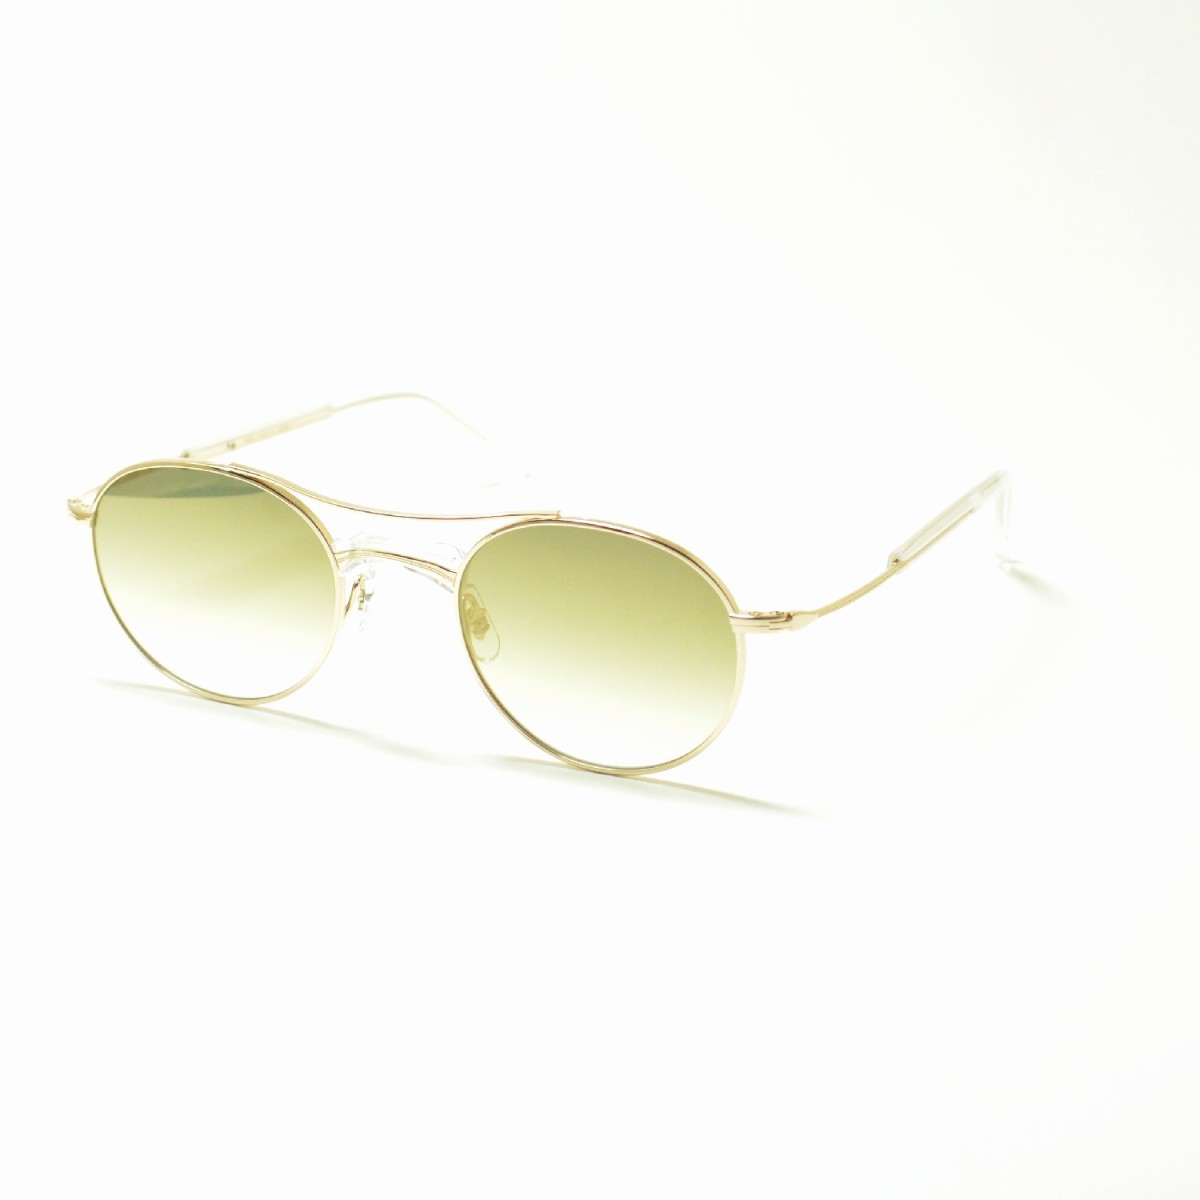 Masunaga Gms 106sg Col S42 Gp Crystal メガネ 眼鏡 めがね メンズ レディース おしゃれ ブランド 人気 おすすめ フレーム 流行り 度付き レンズ サングラス